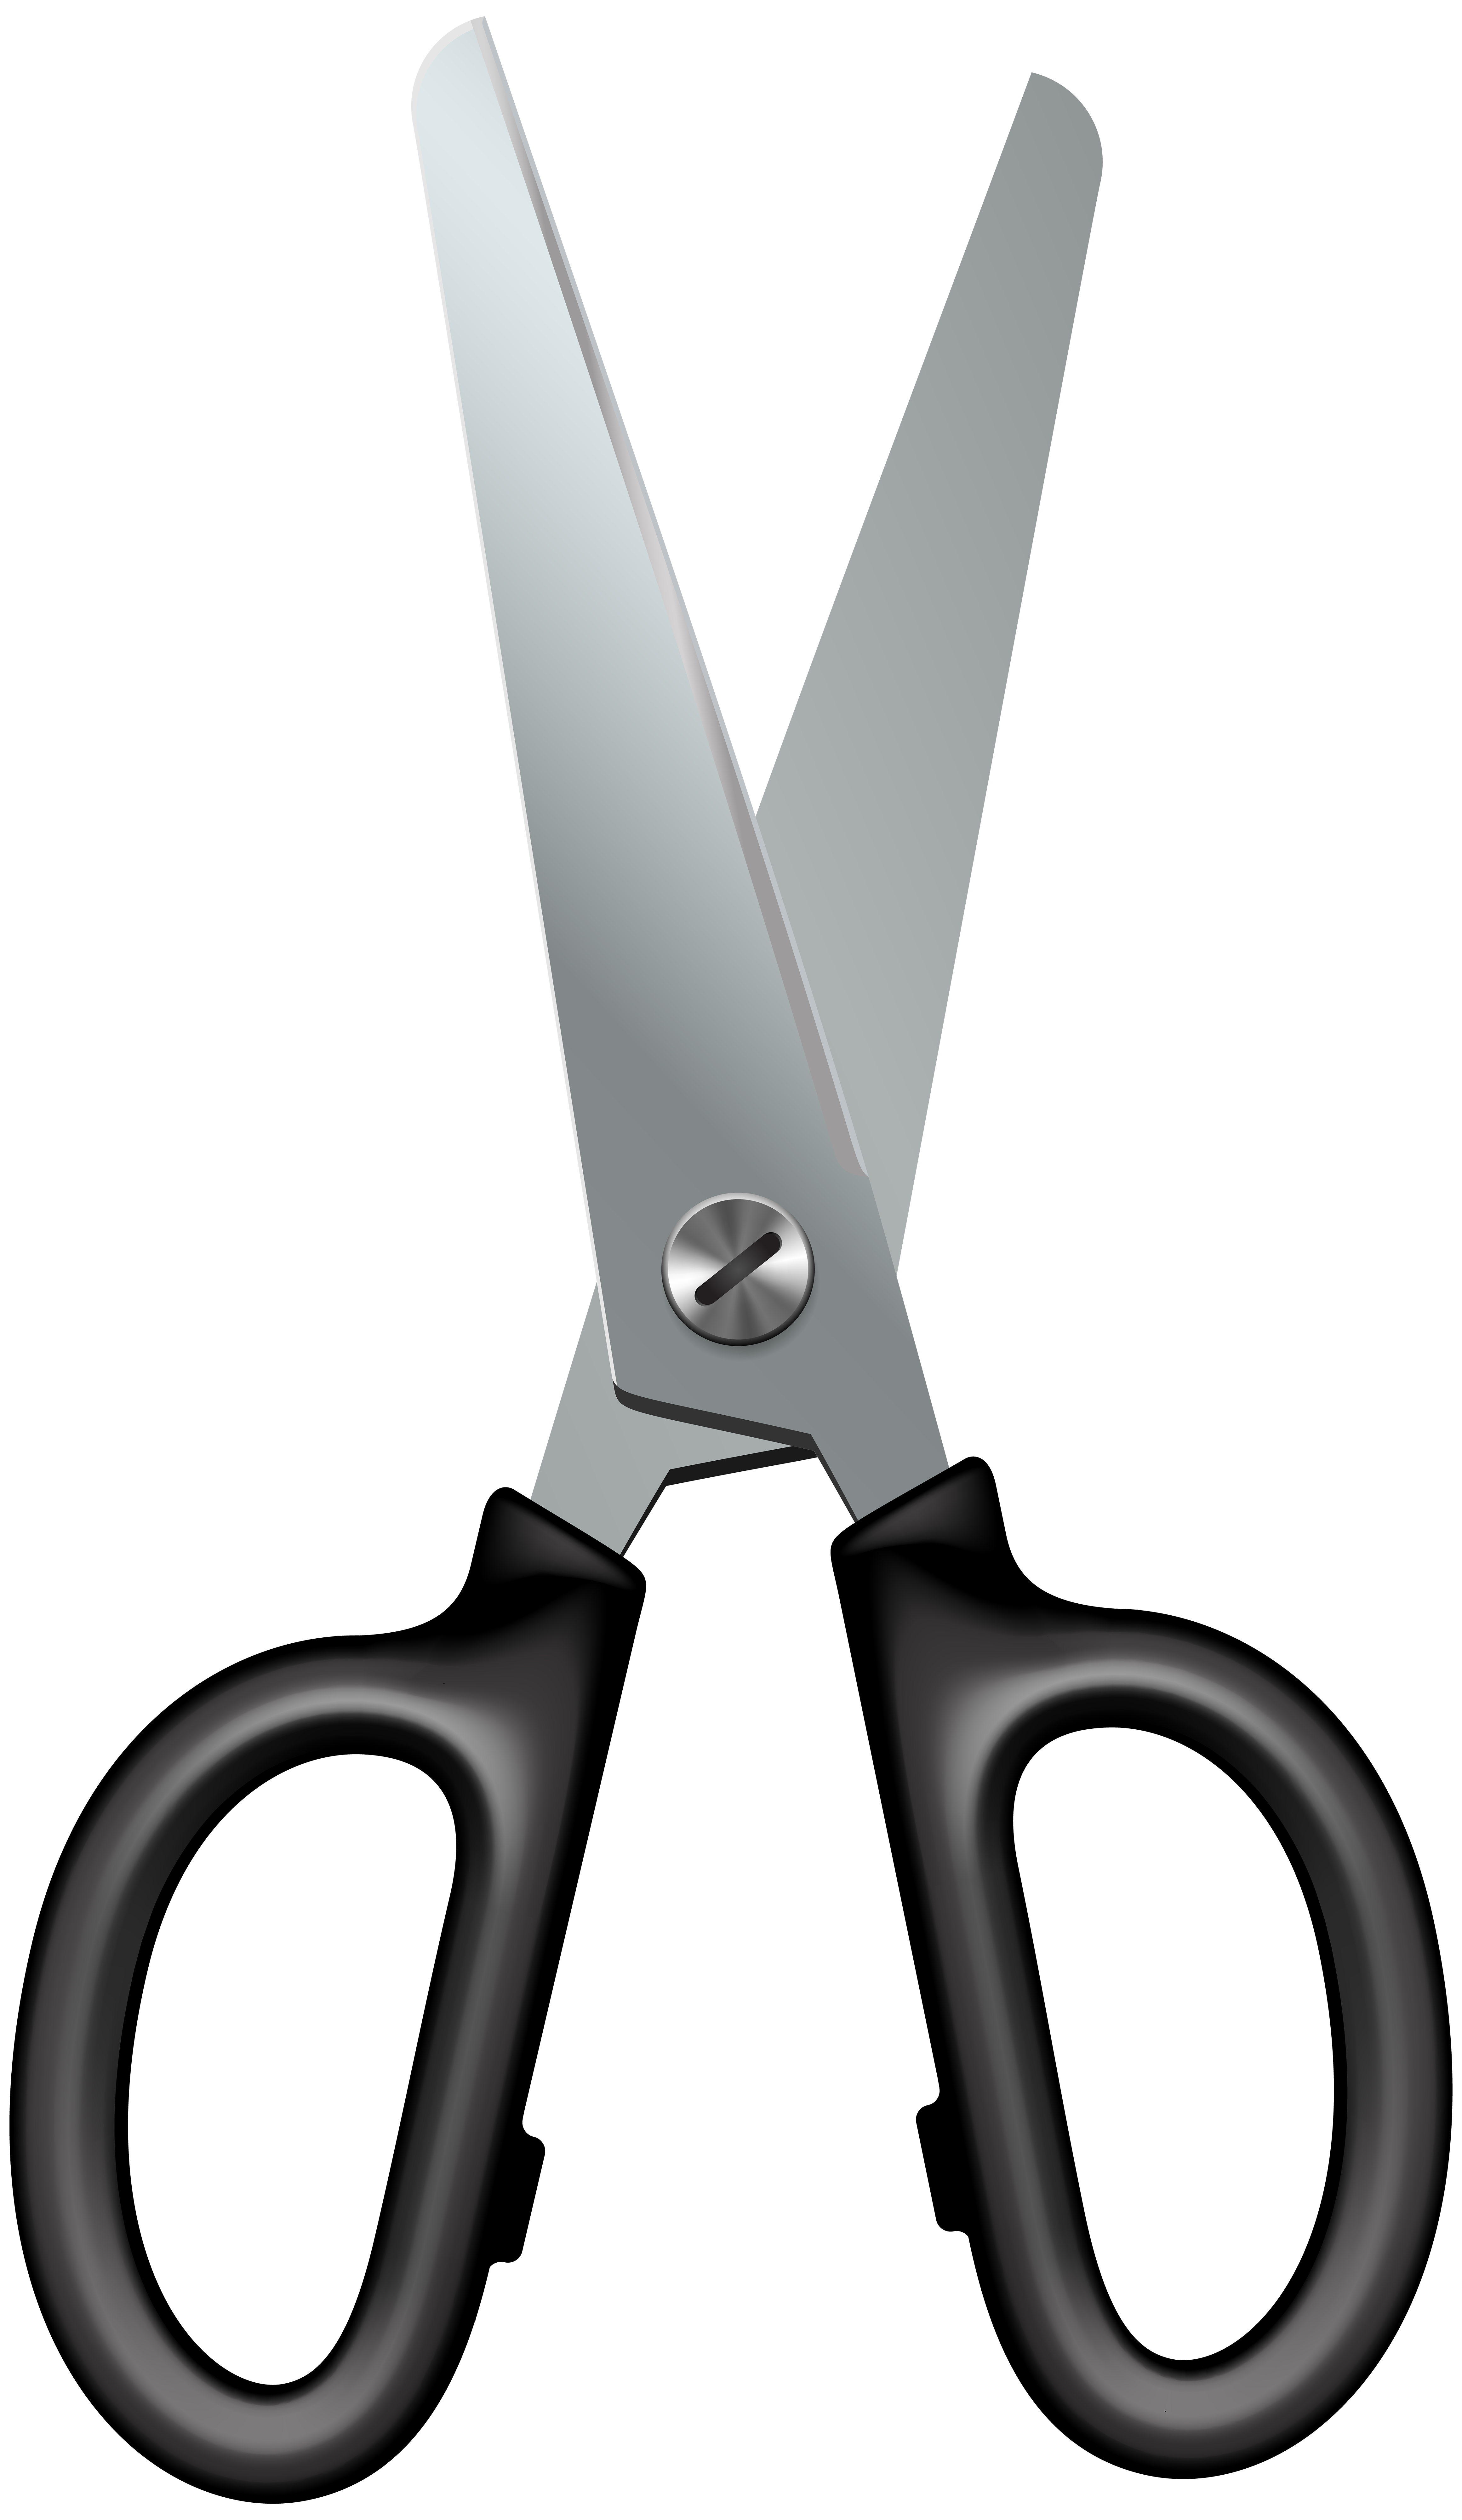 Scissors PNG Clip Art Image.